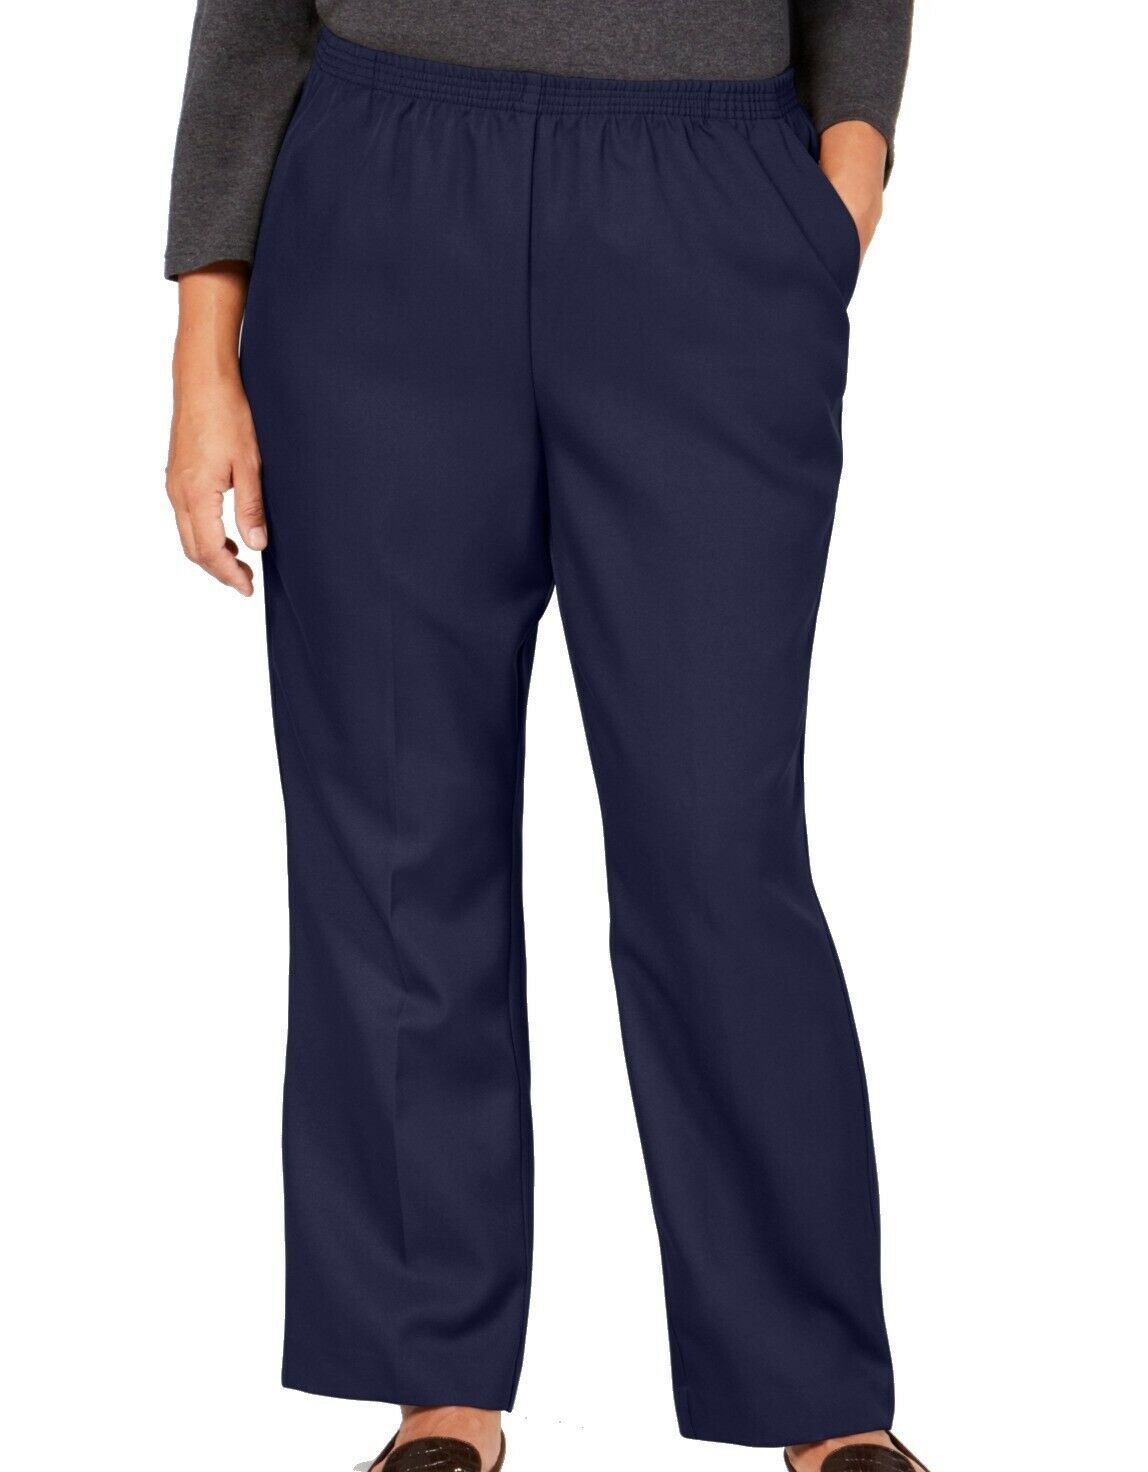 Karen Scott Women's Pants Plus Pull On Comfy Stretch Intrepid Blue 0X NWT